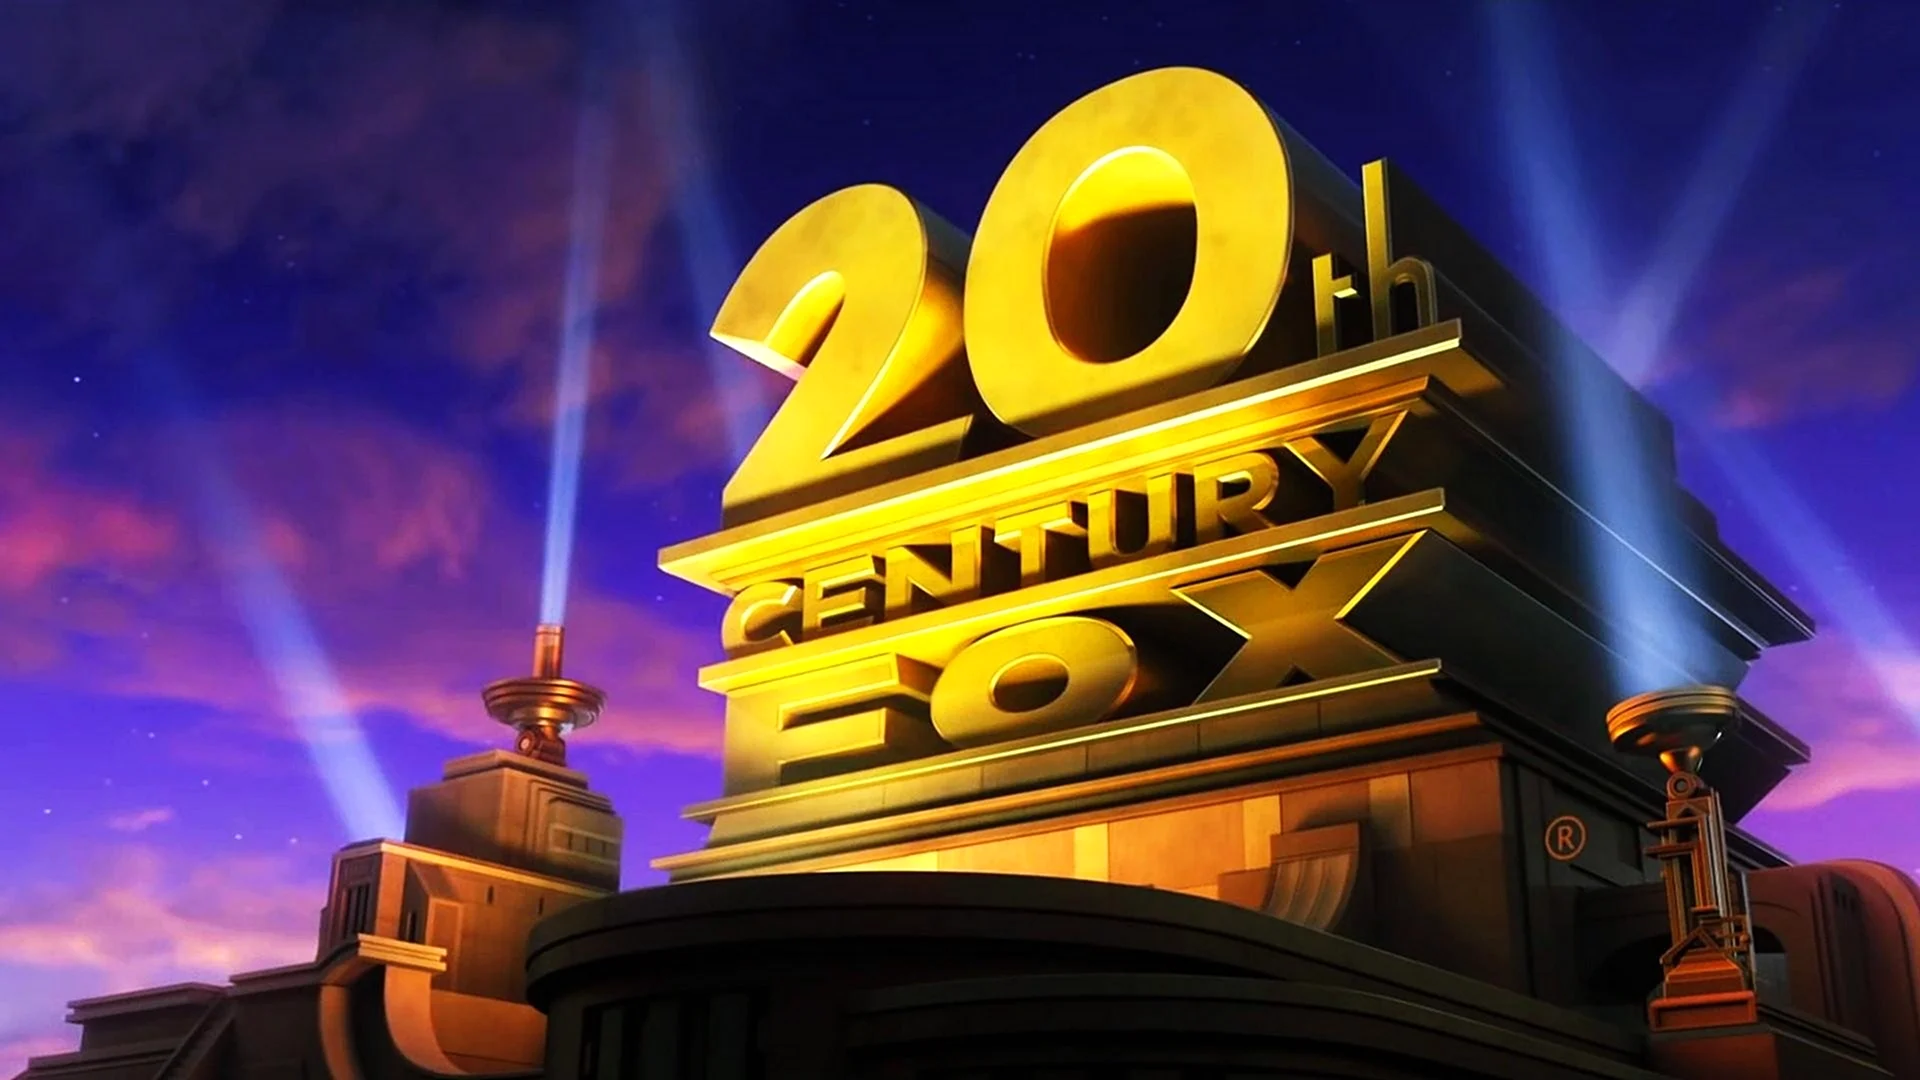 20rh Century Fox